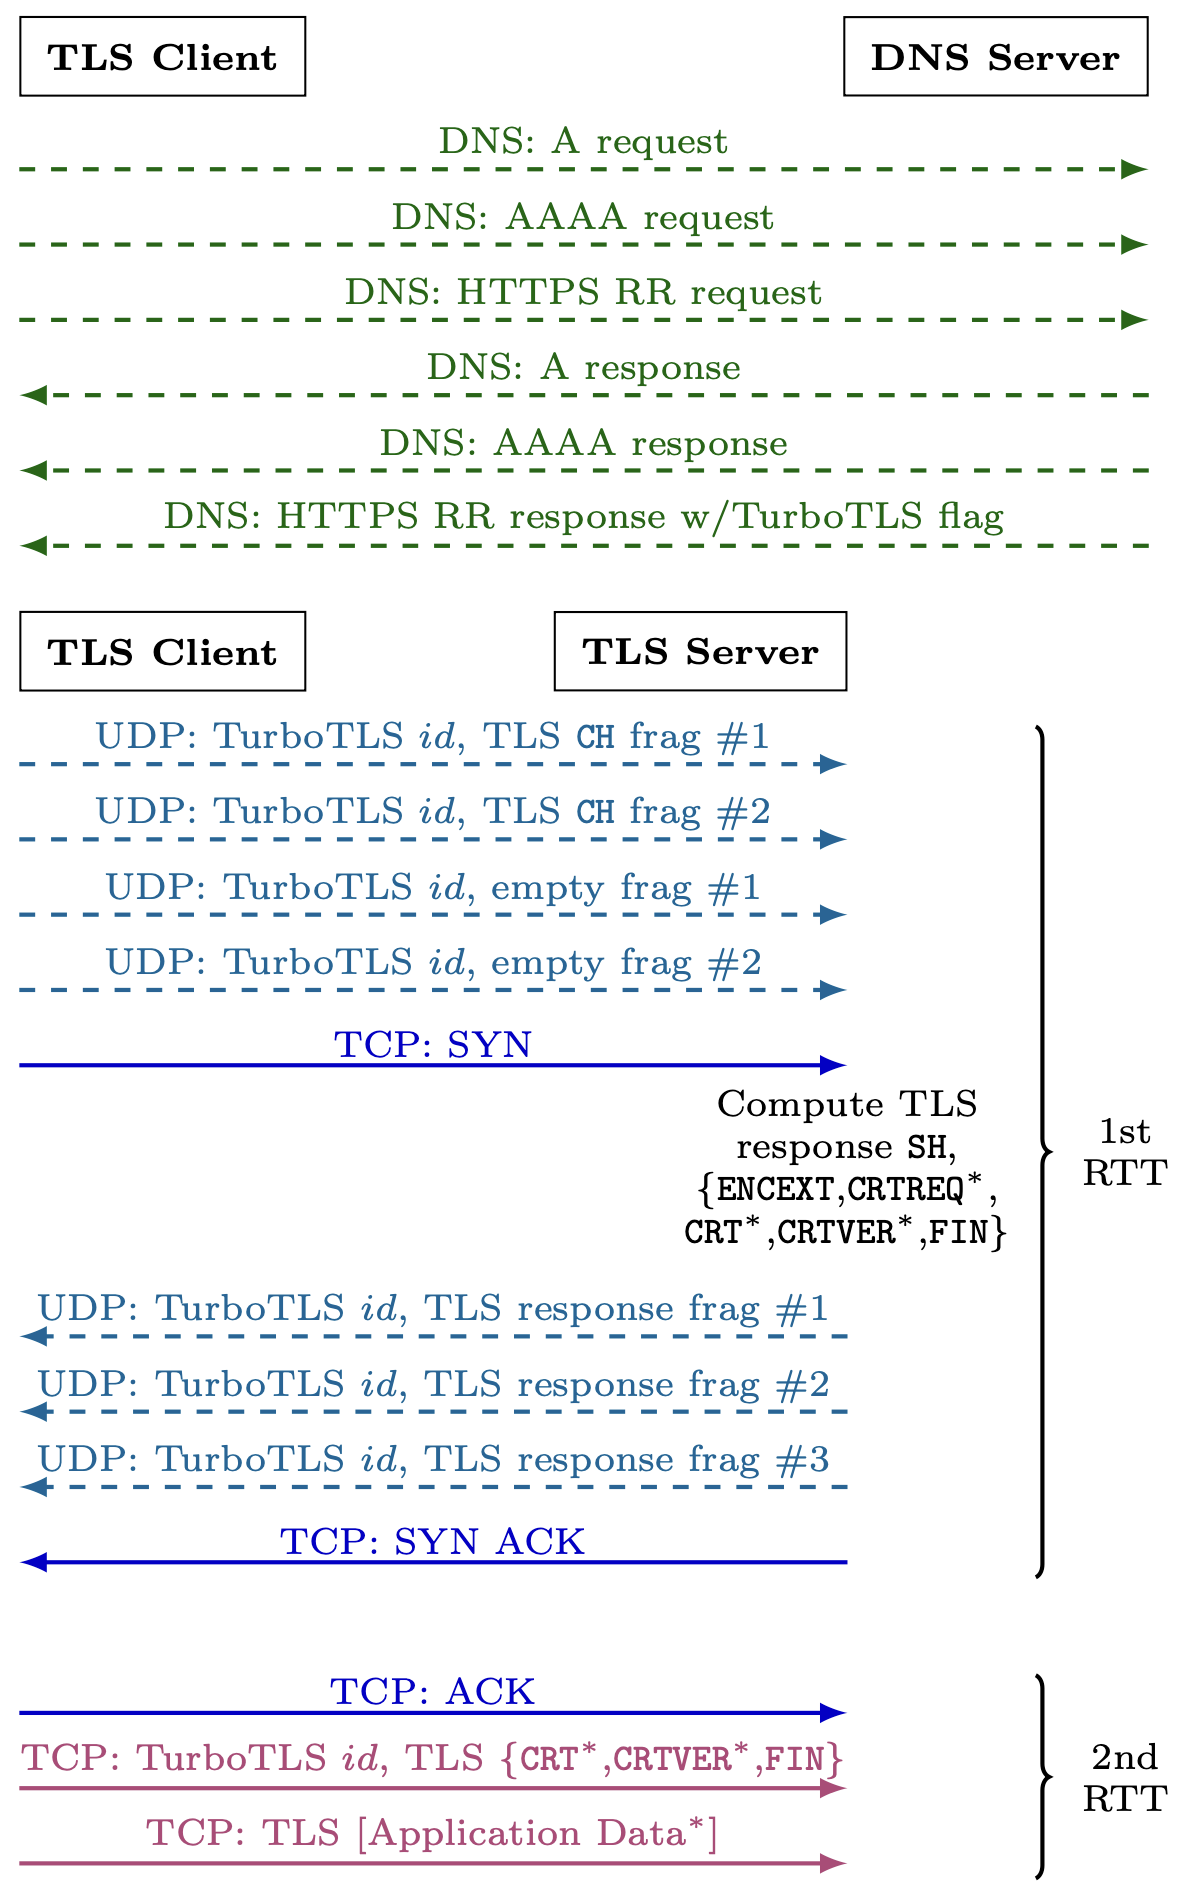 Message flow of TurboTLS